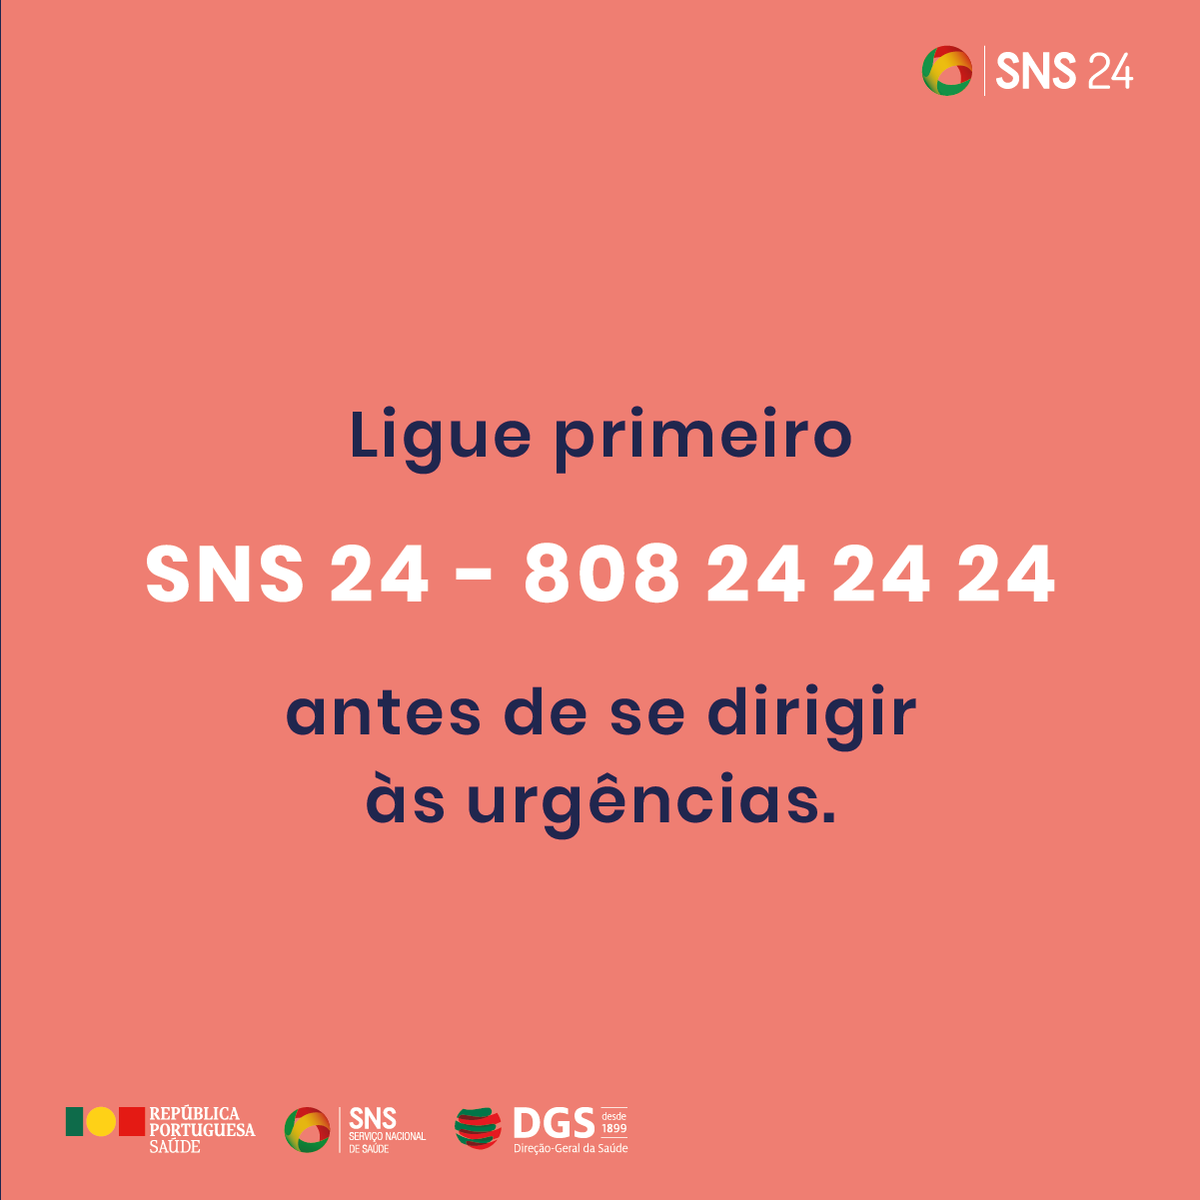 SNS_Portugal tweet picture